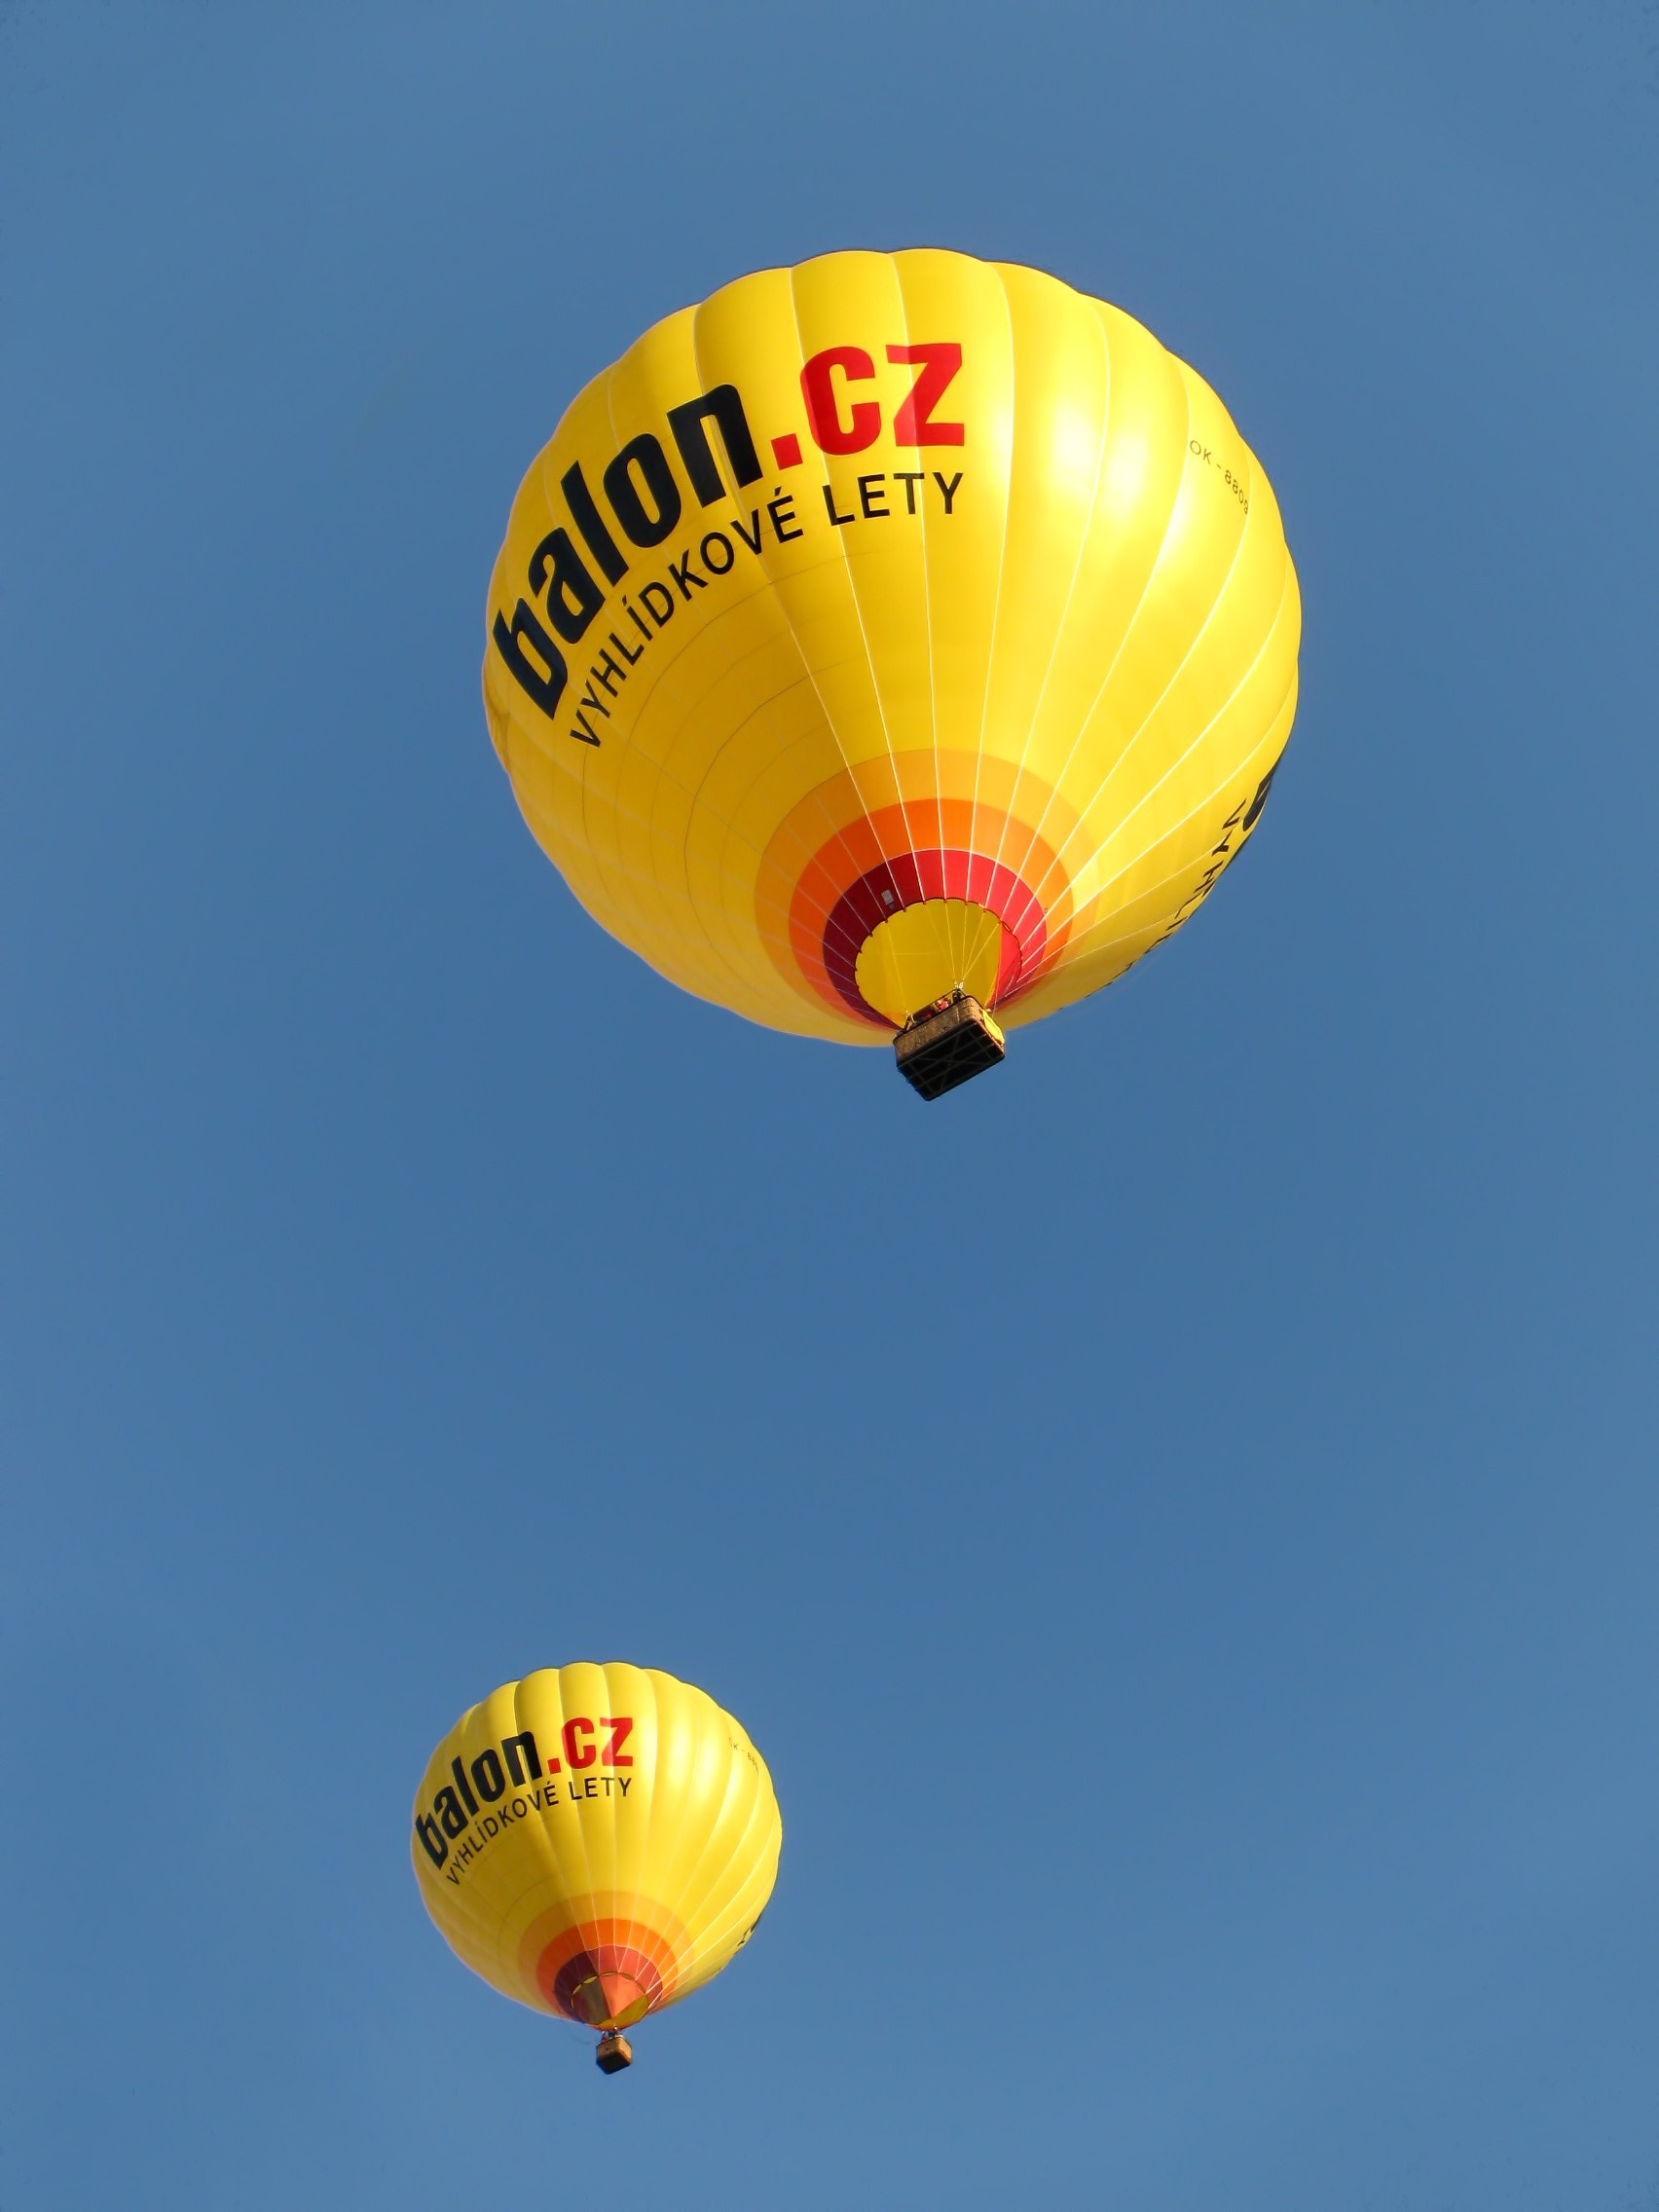 Hot Air Balloon, Hot Air Balloon Ride, hot air balloon, flying